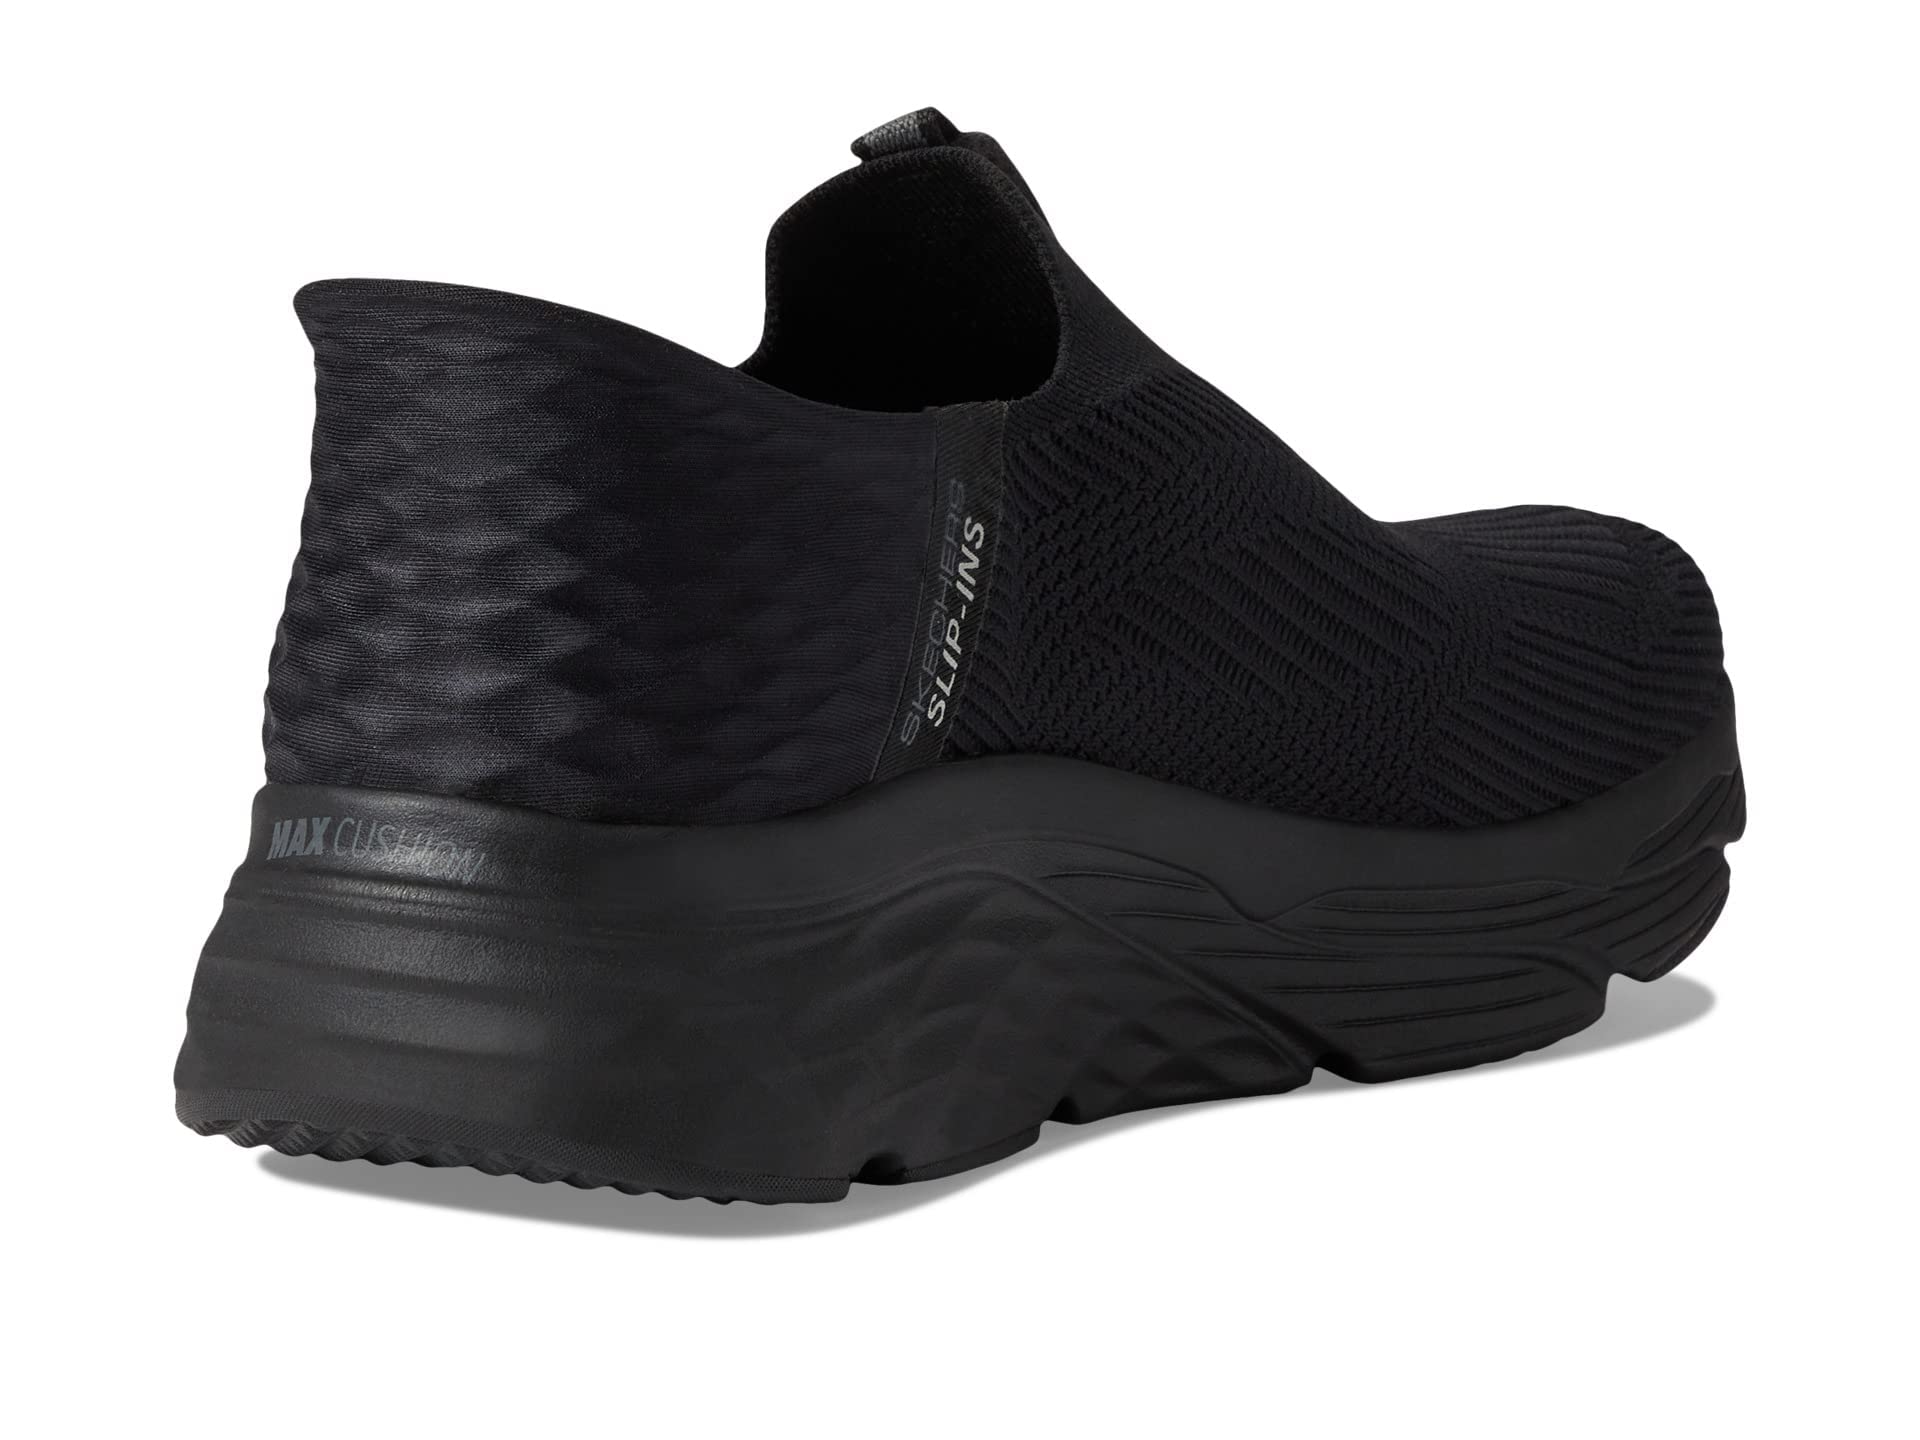 Skechers Men's Max Cushioning Slip-ins-Athletic Slip-on Running Walking Shoes with Memory Foam Sneaker